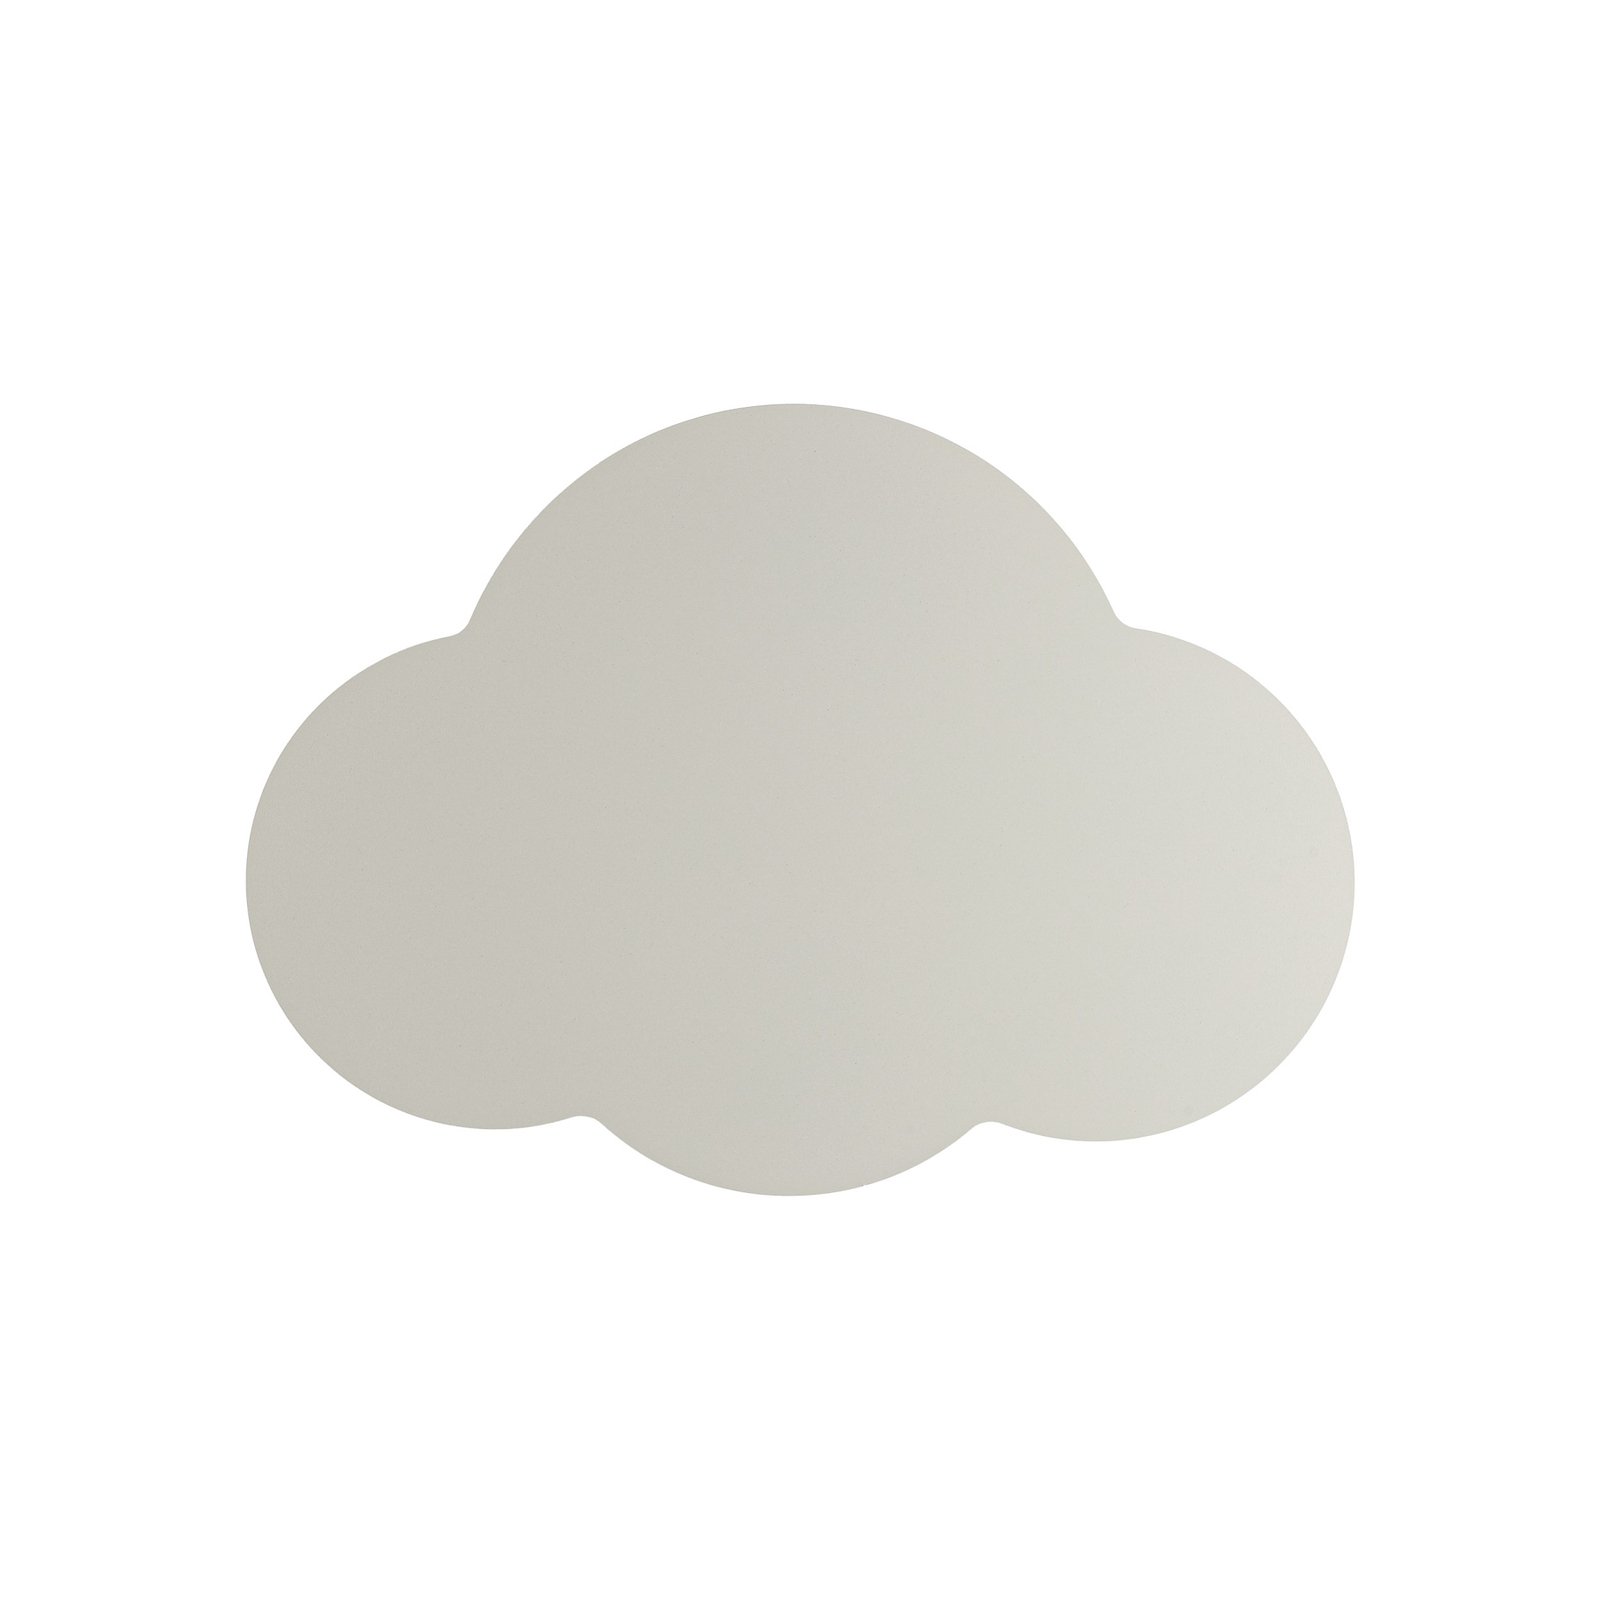 Cloud vegglampe, beige, stål, indirekte lys, 38 x 27 cm